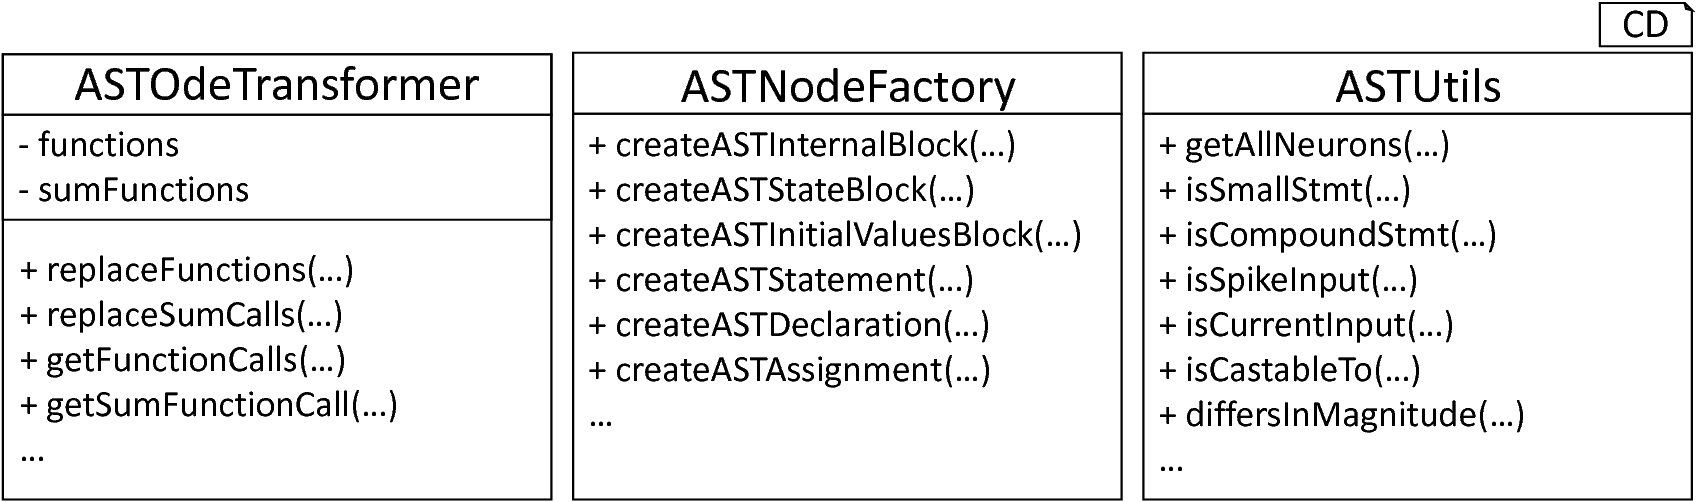 AST-manipulating modules